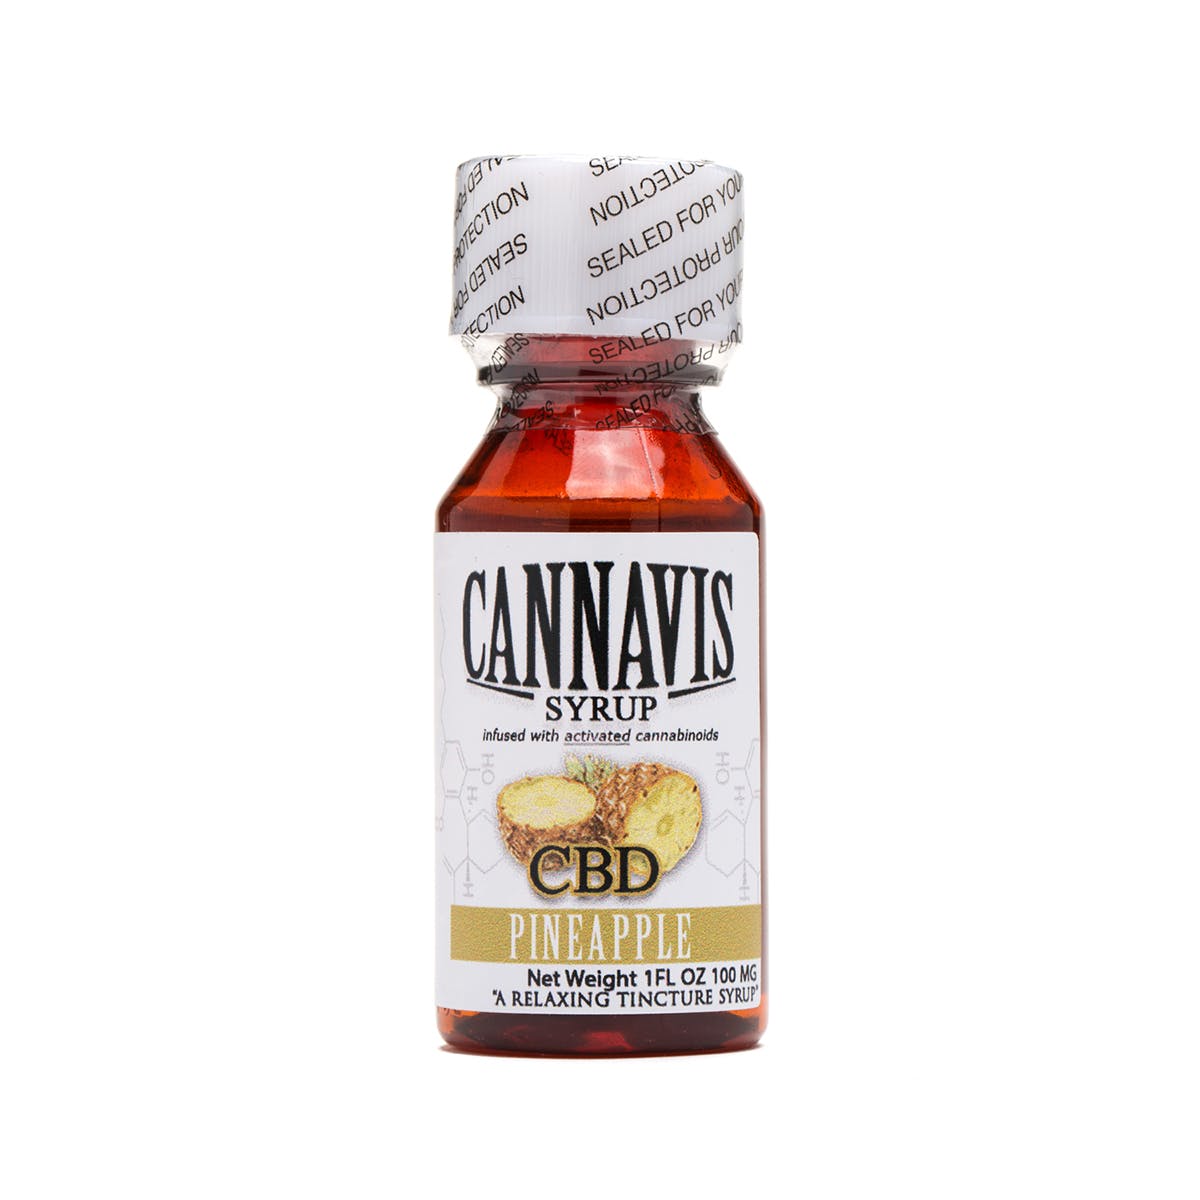 marijuana-dispensaries-kush-25-in-wilmington-cannavis-syrup-2c-cbd-pineapple-100mg